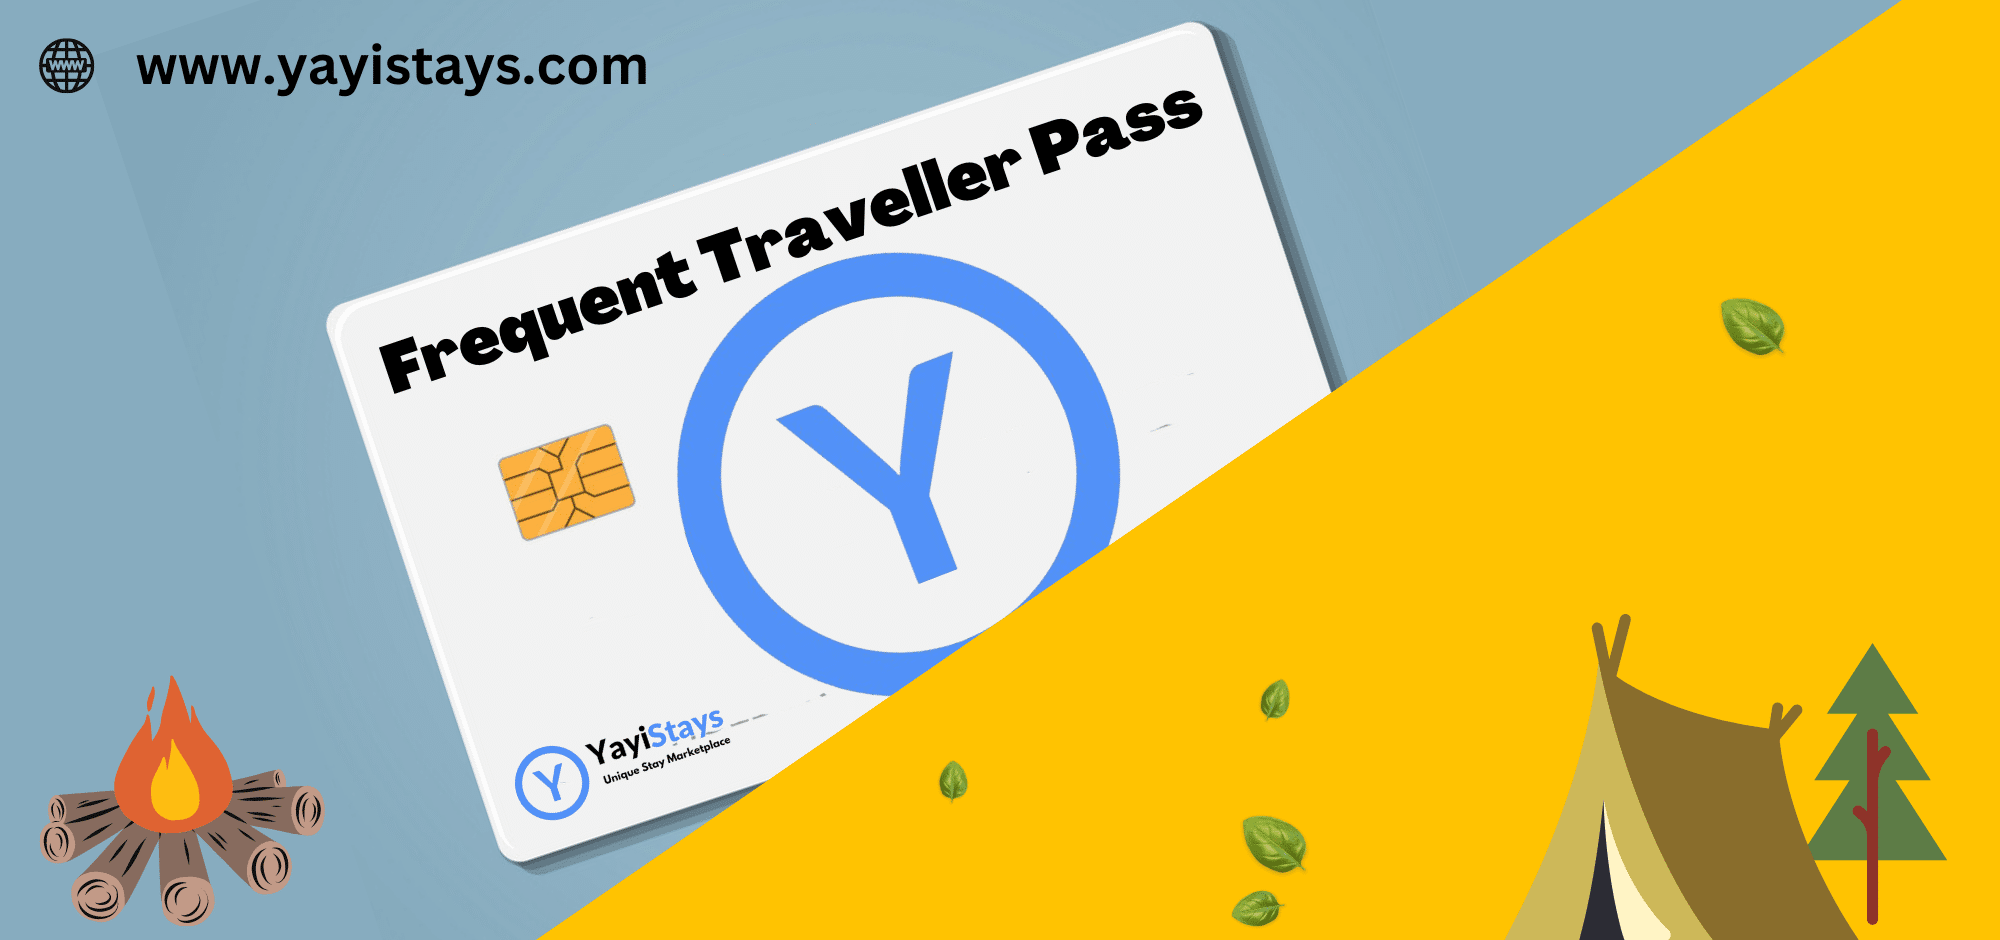 frequent traveller pass 3 viajes